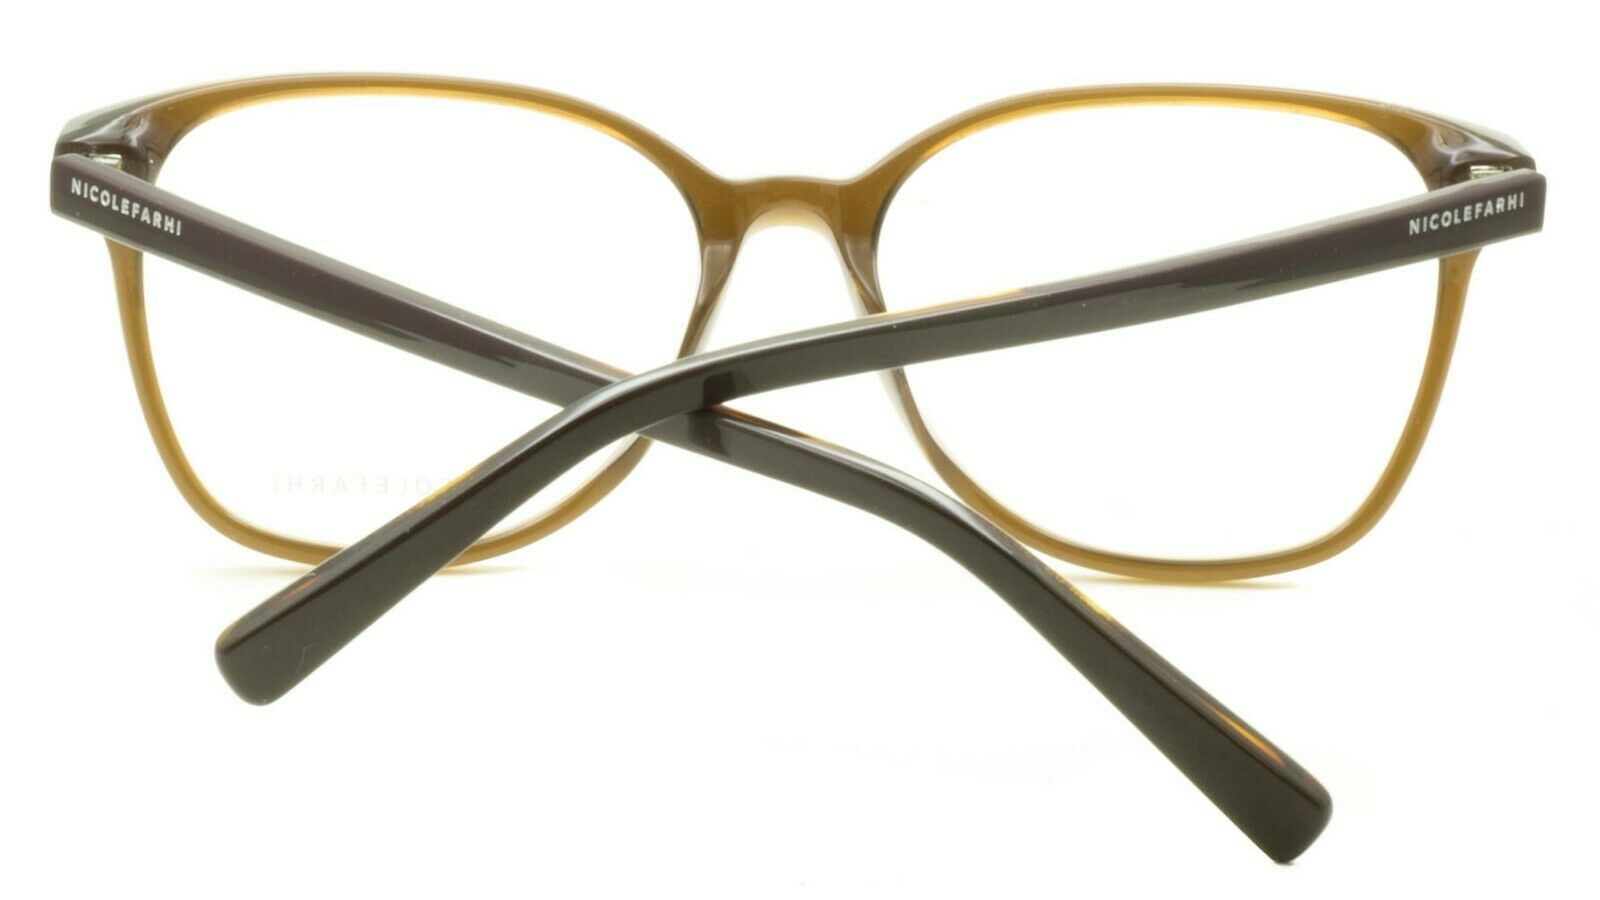 Nicole Farhi 03 30565494 52mm Eyewear Glasses RX Optical Eyeglasses FRAMES - New